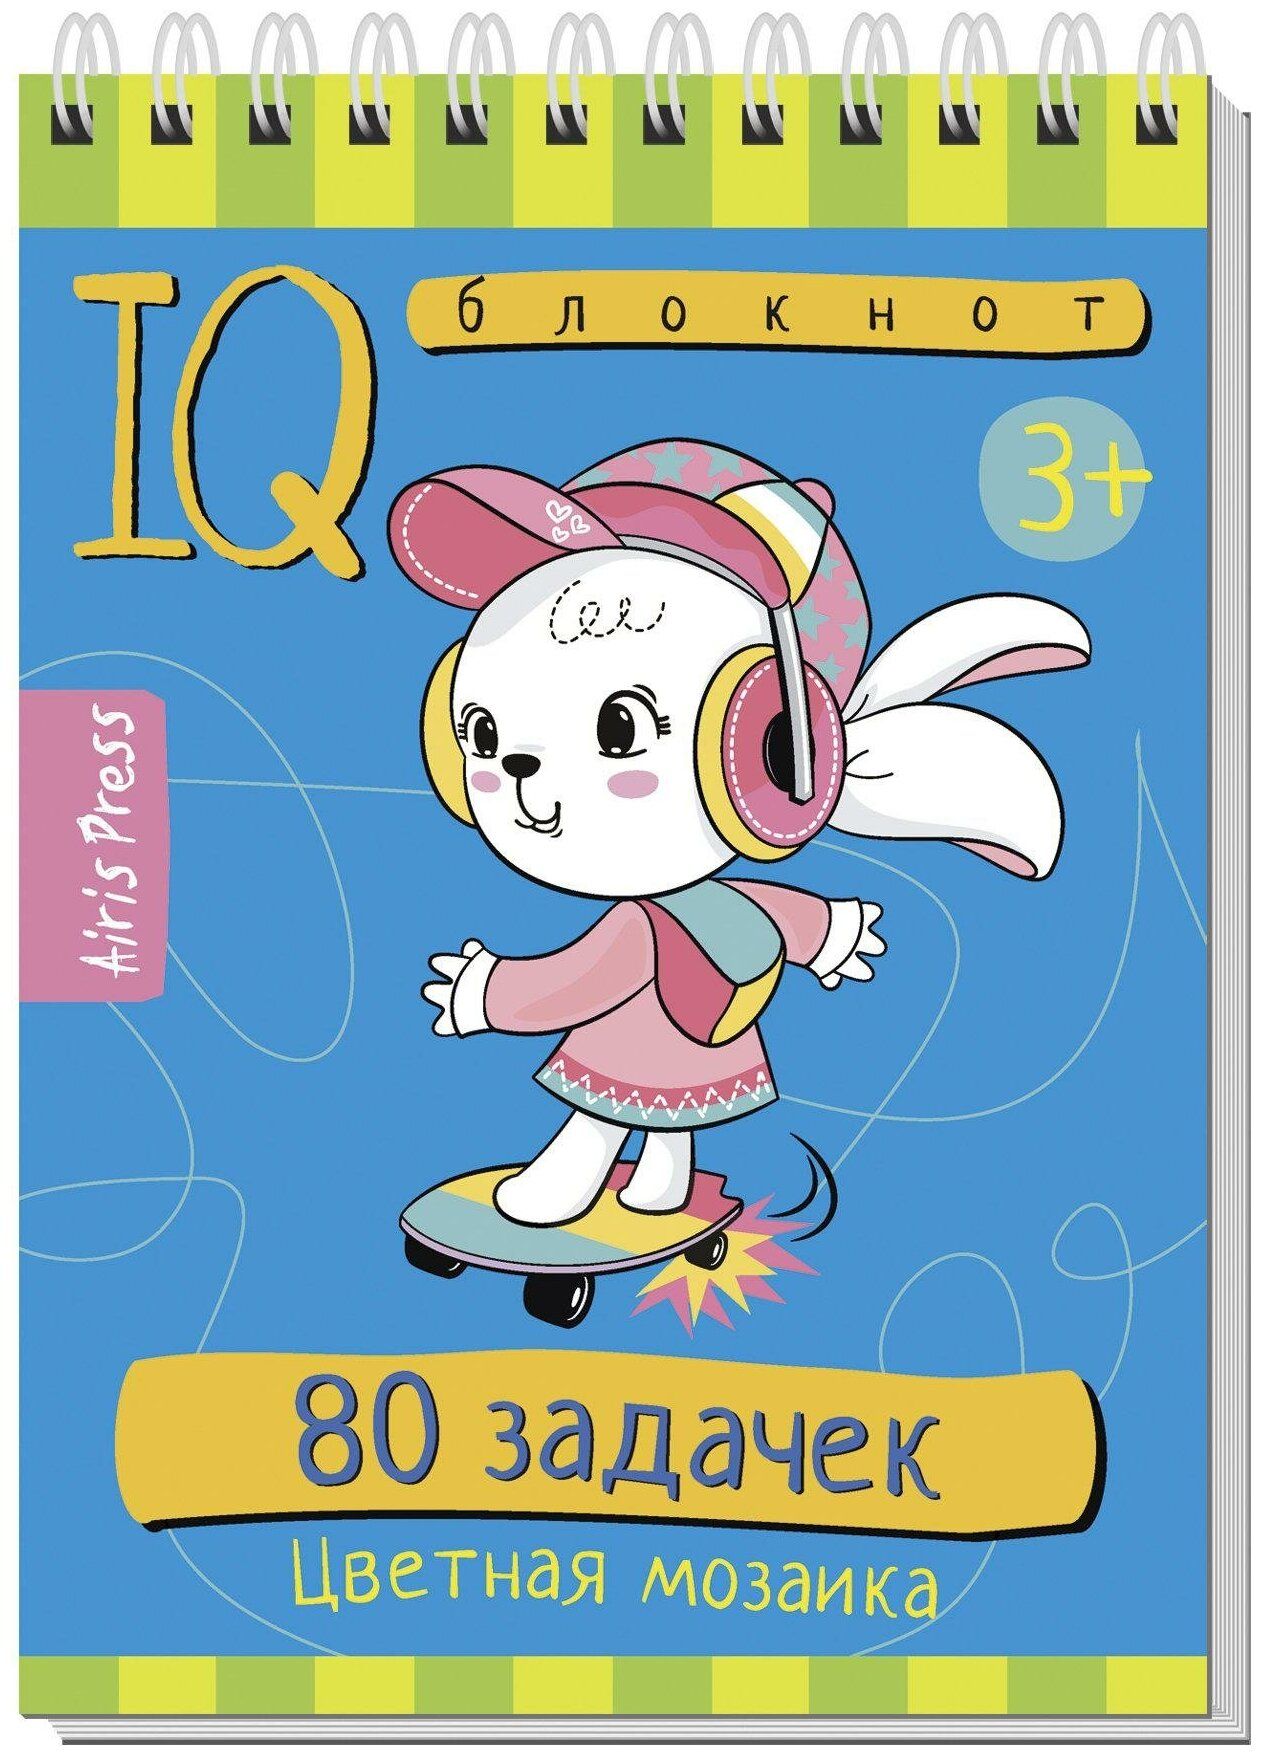 IQ блокнот Айрис-пресс 80 задачек. Цветная мозаика 3+ арт.28401 iq блокнот 80 задачек цветная мозаика